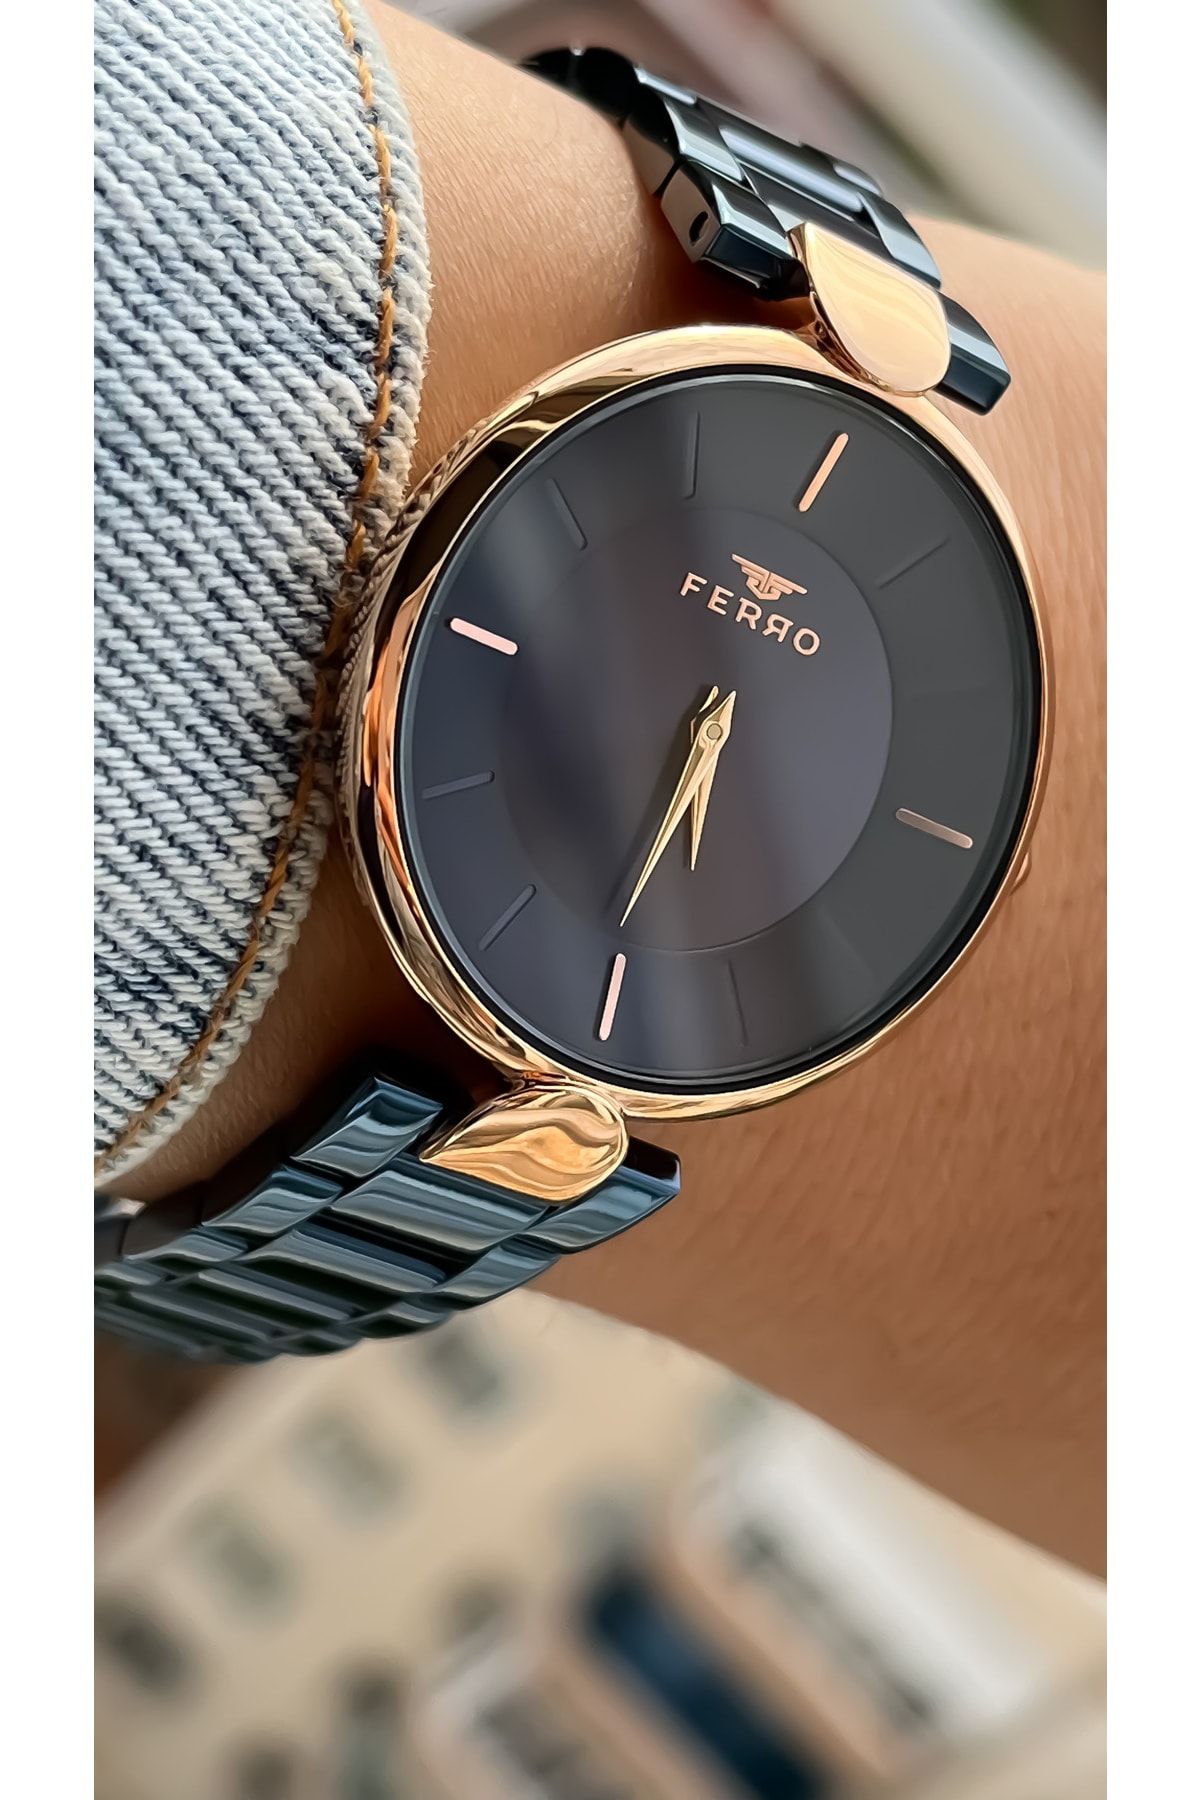 Ferro Watches Distinct 3 Vintage Style One Hand Race Watch Grand Prix –  Ferro & Company Watches